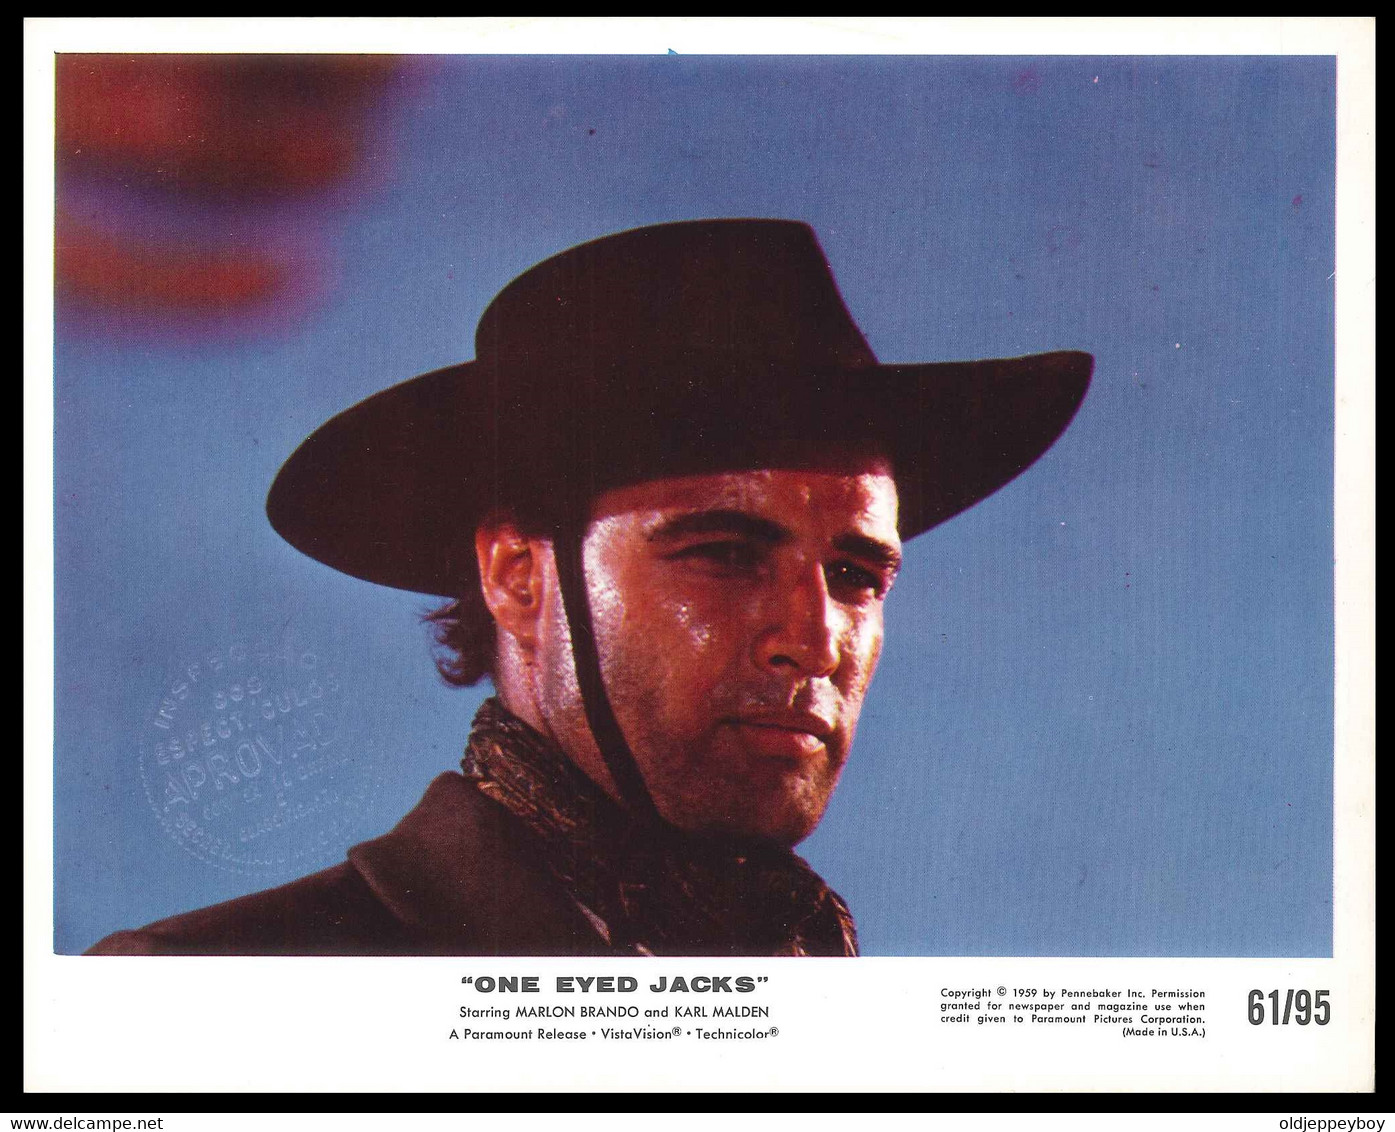 One Eyed Jacks-Marlon Brando-Karl Malden - 20 X 25 Cm - Colour - Movie Still- Western Paramount Release Technicolour - Photographs